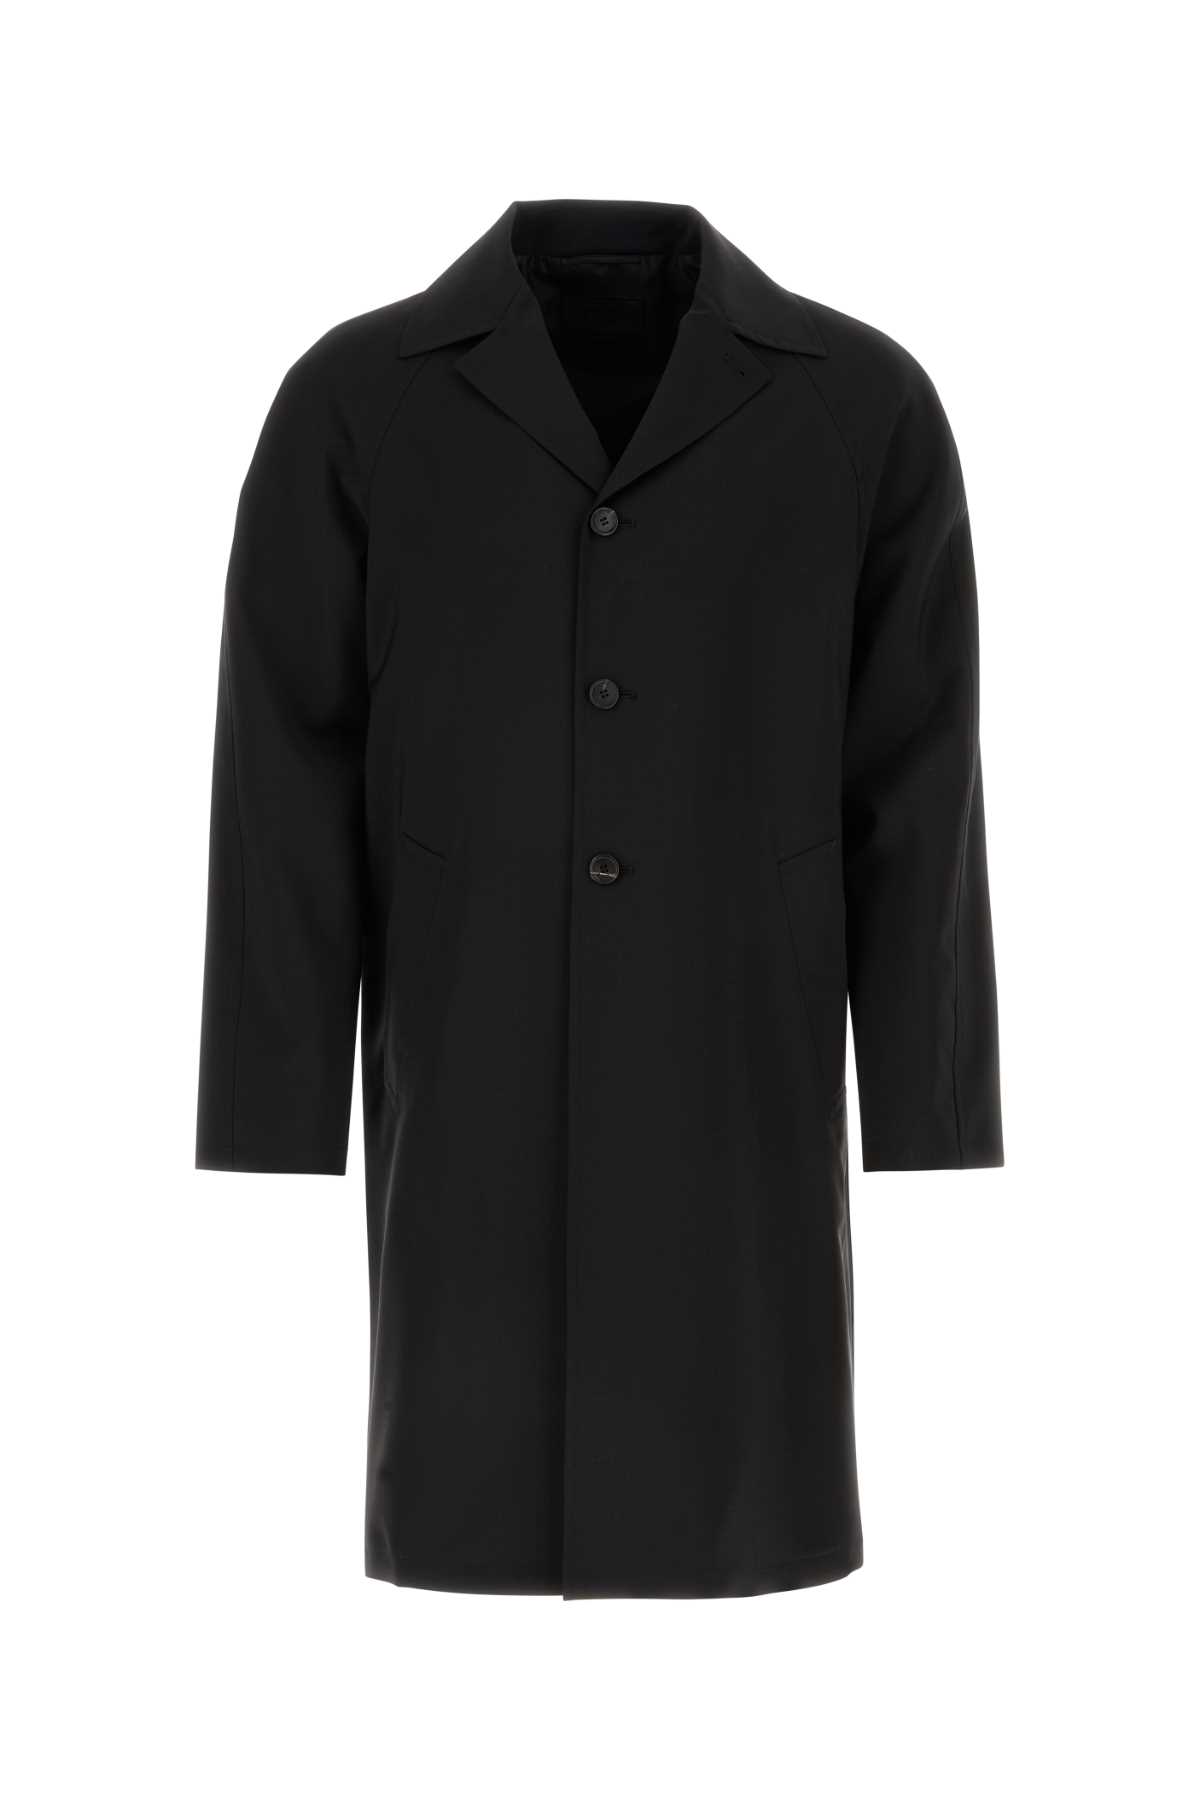 Prada Black Wool Blend Overcoat